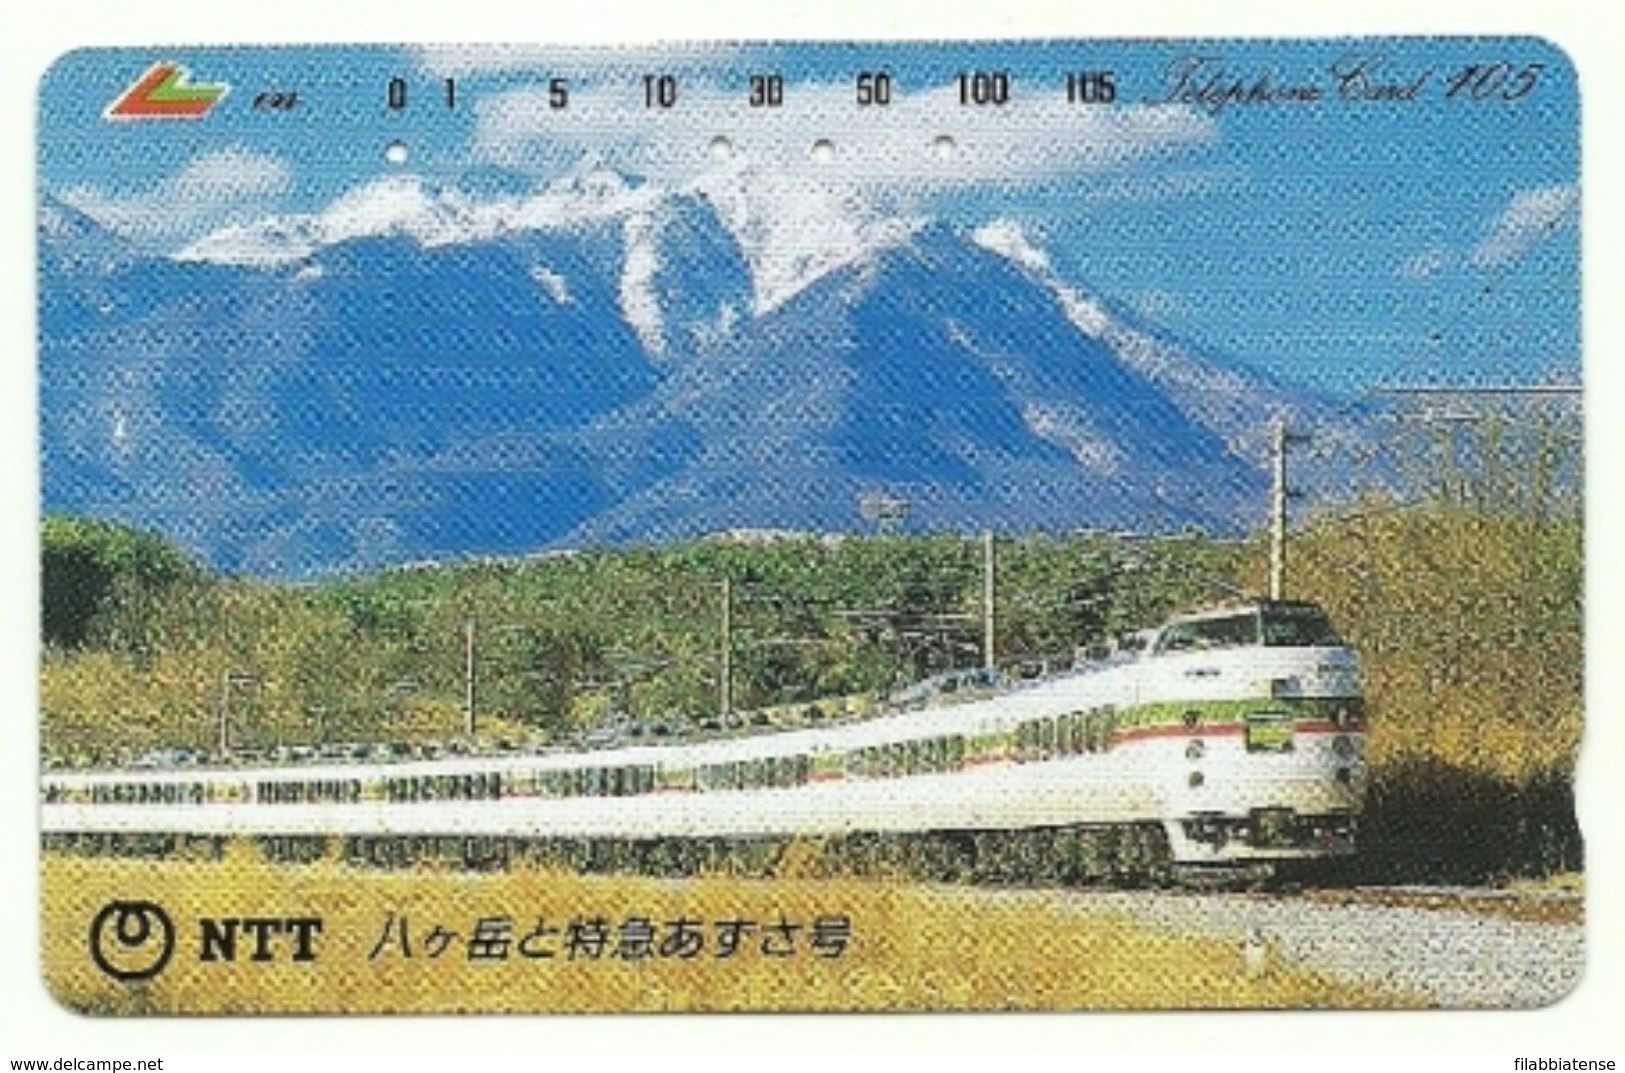 Giappone - Tessera Telefonica Da 105 Units T305 - NTT - Trains